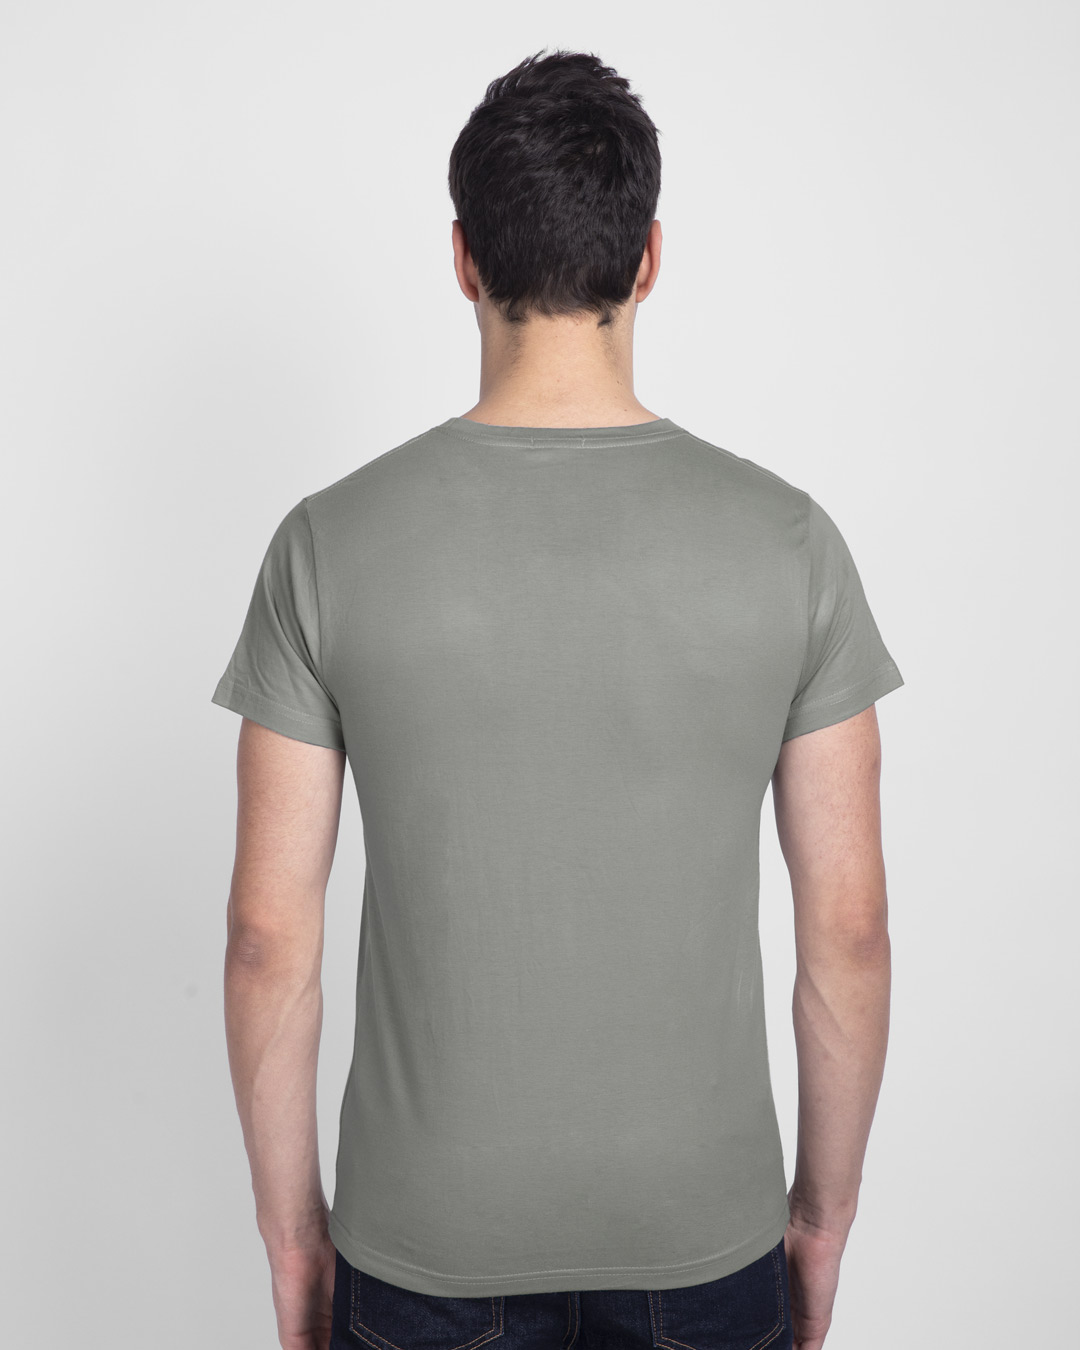 Shop Joey To My Chandler Half Sleeve T-Shirt ( FRL )-Back